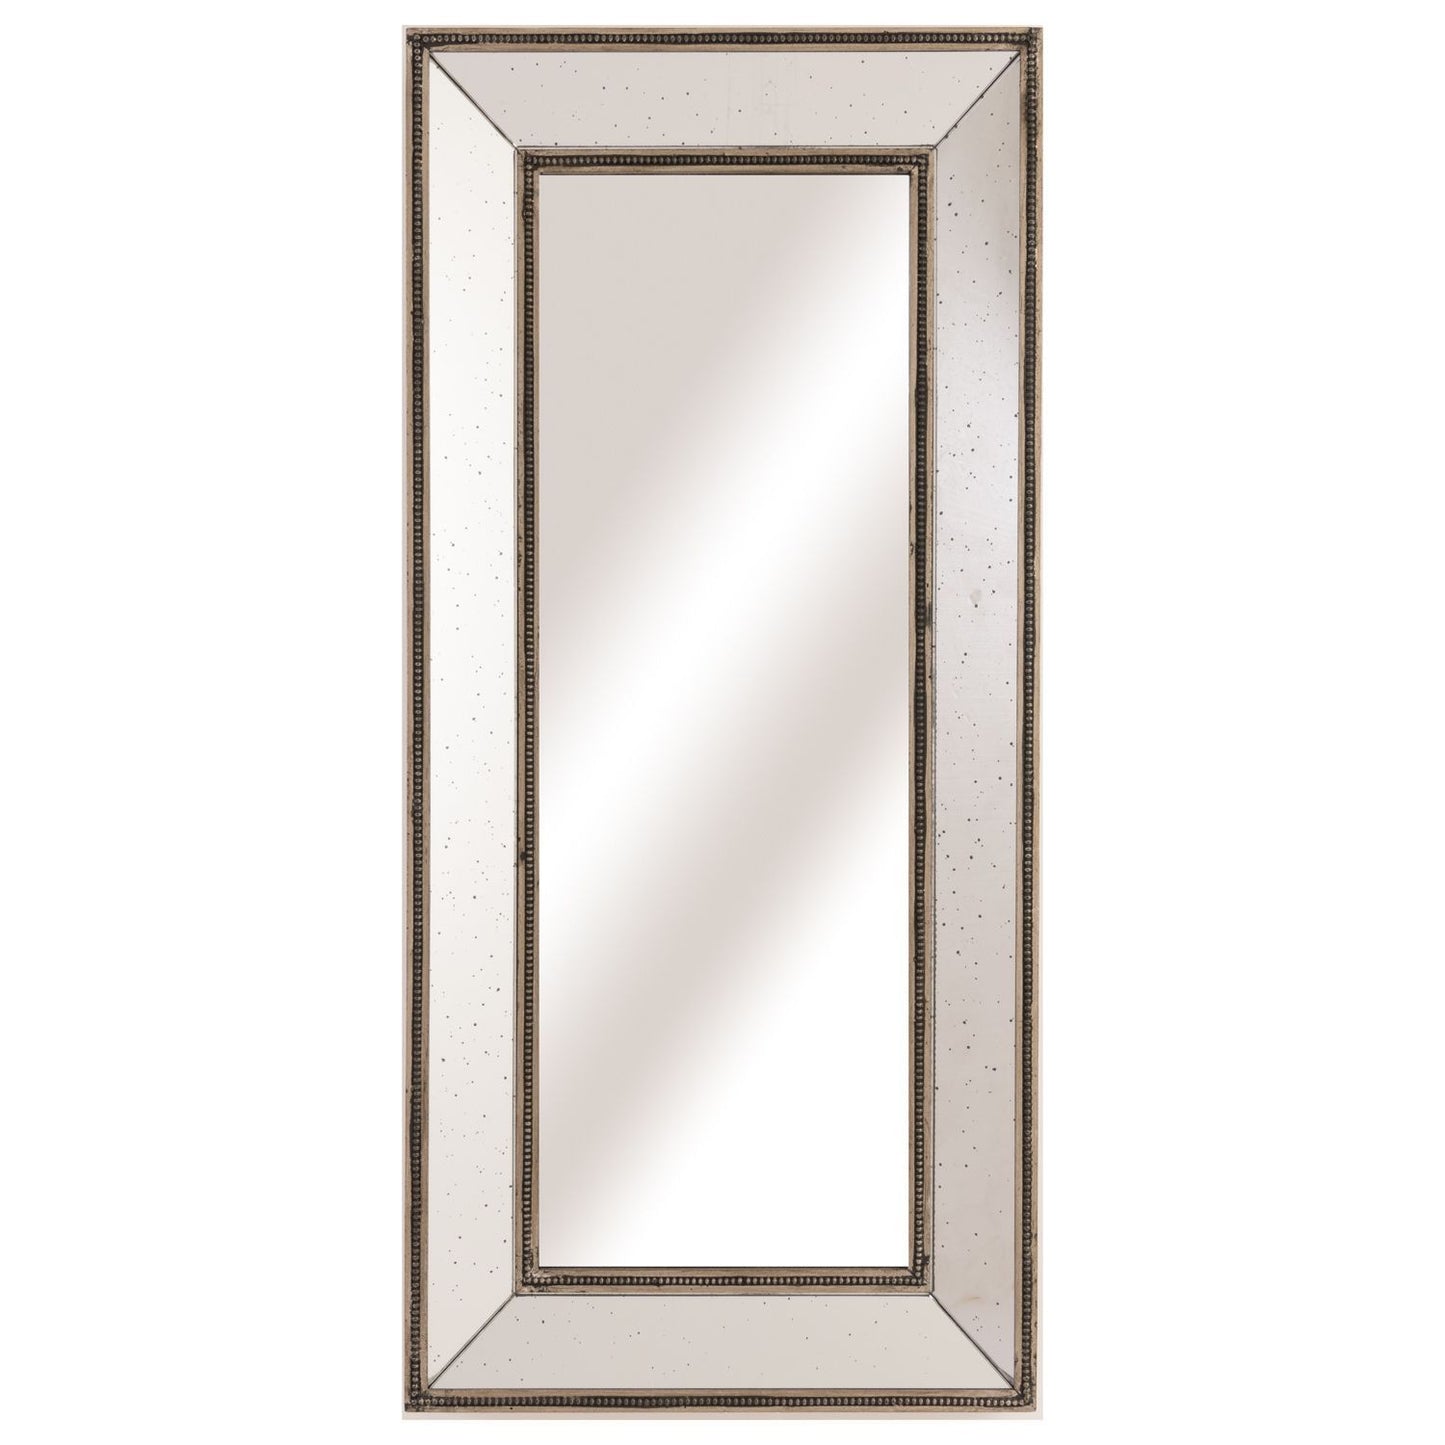 Bronze rectangular wall mirror